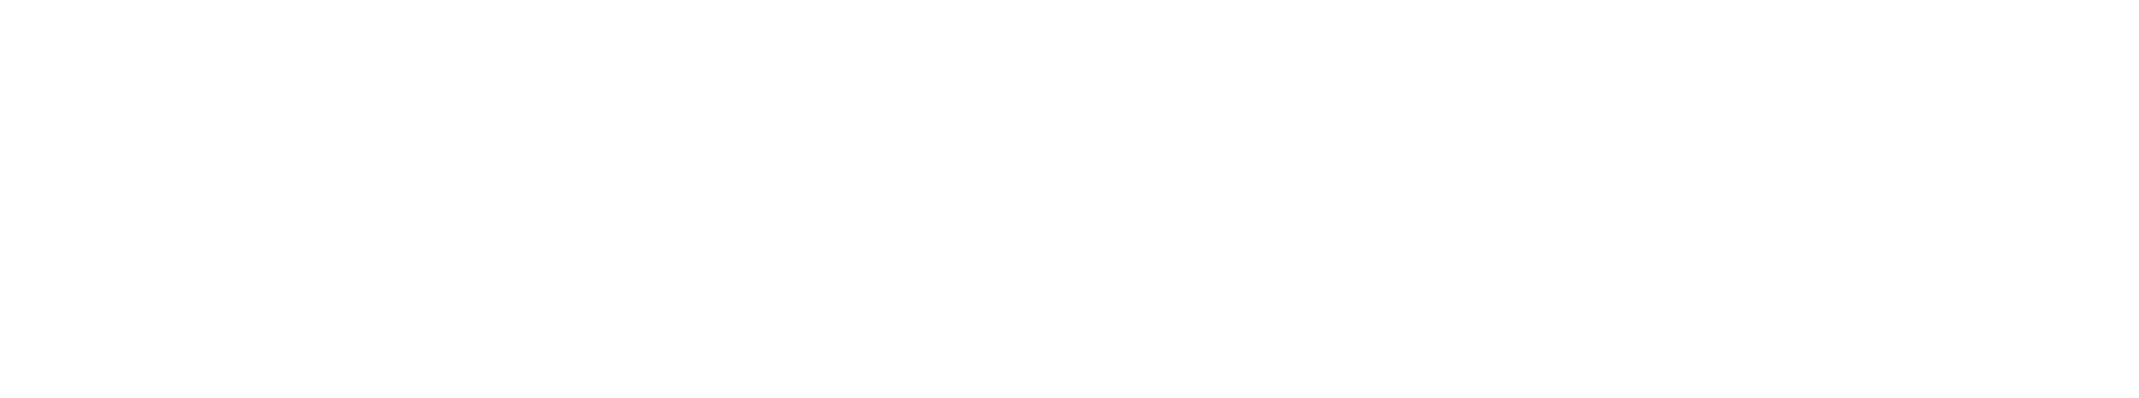 Logos Sponsors-01-1